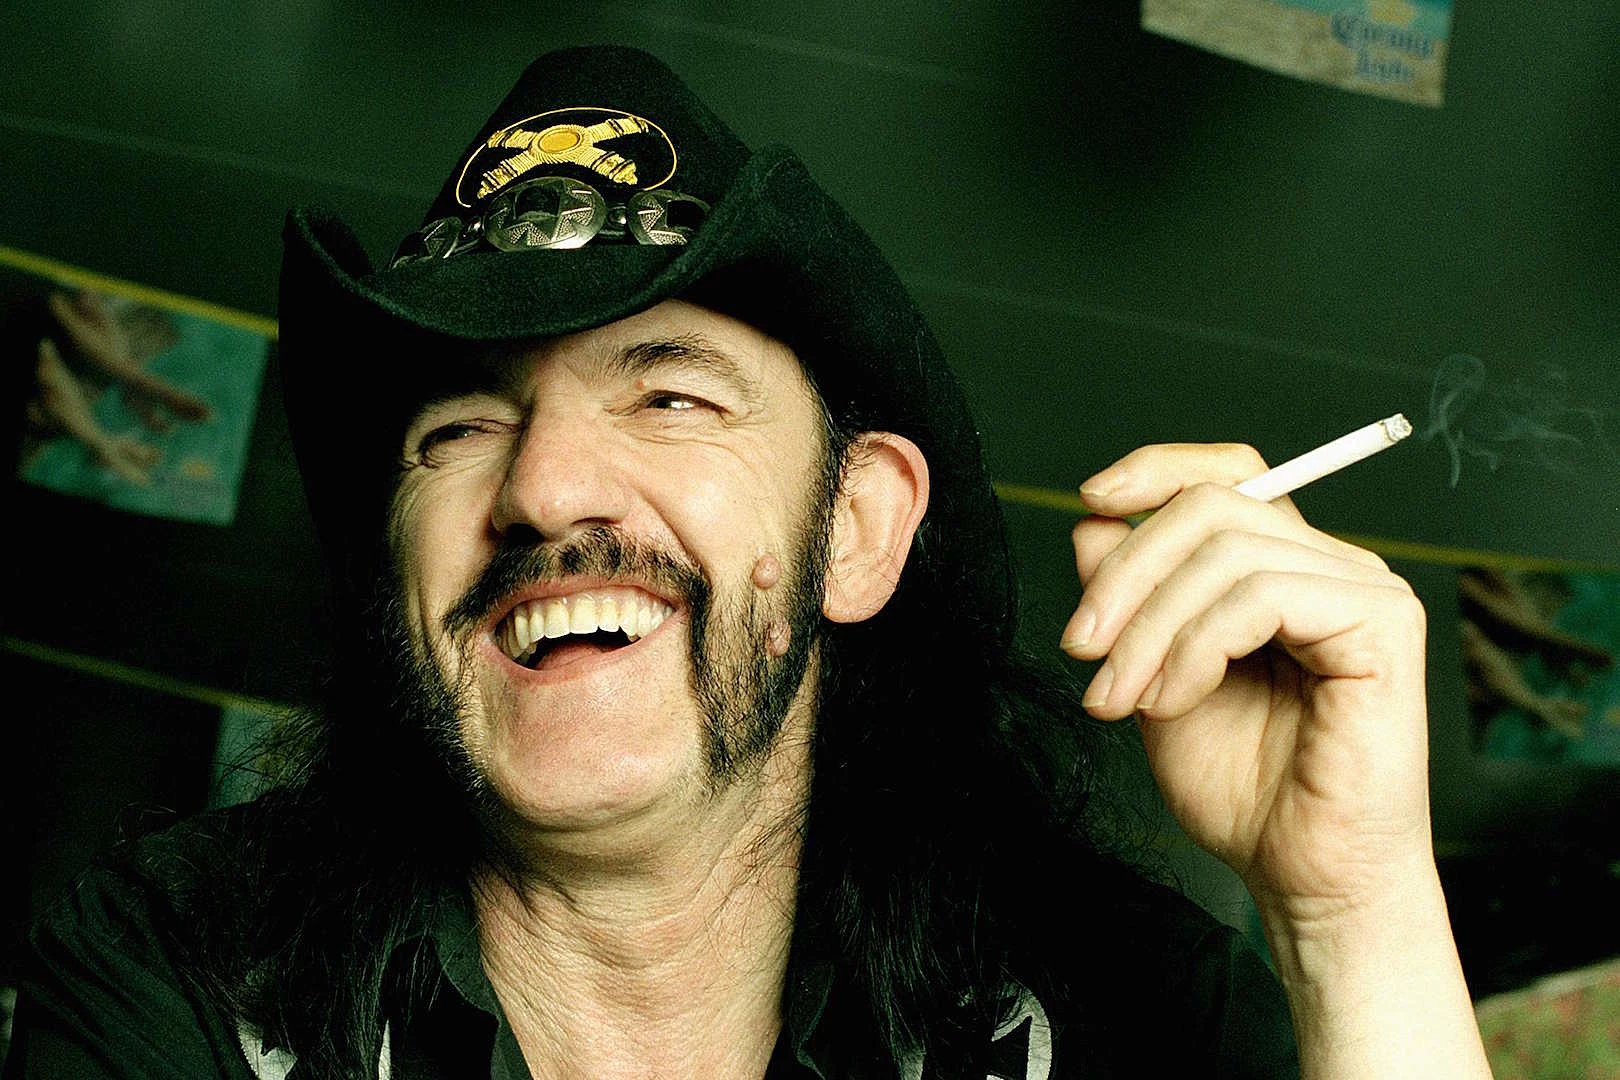 Motorhead's Lemmy Kilmister on Life as Jimi Hendrix's Roadie